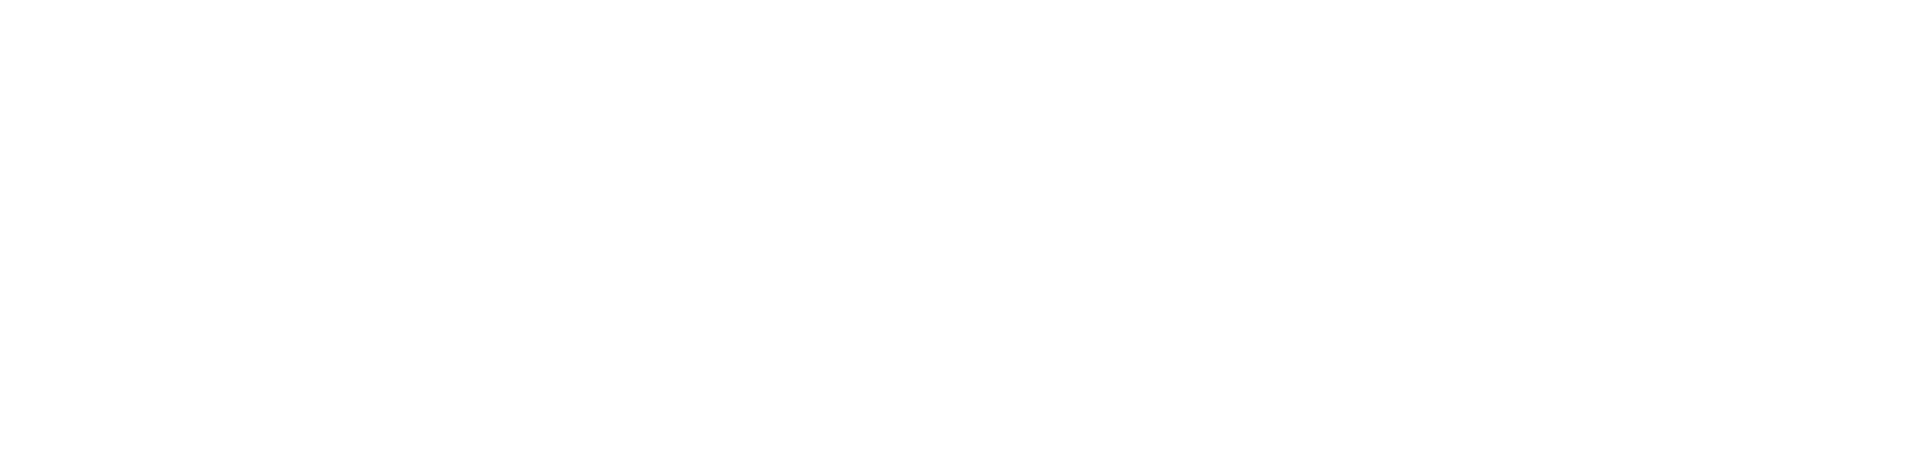 Master & Apprentice: A Special Look at Ahsoka logo